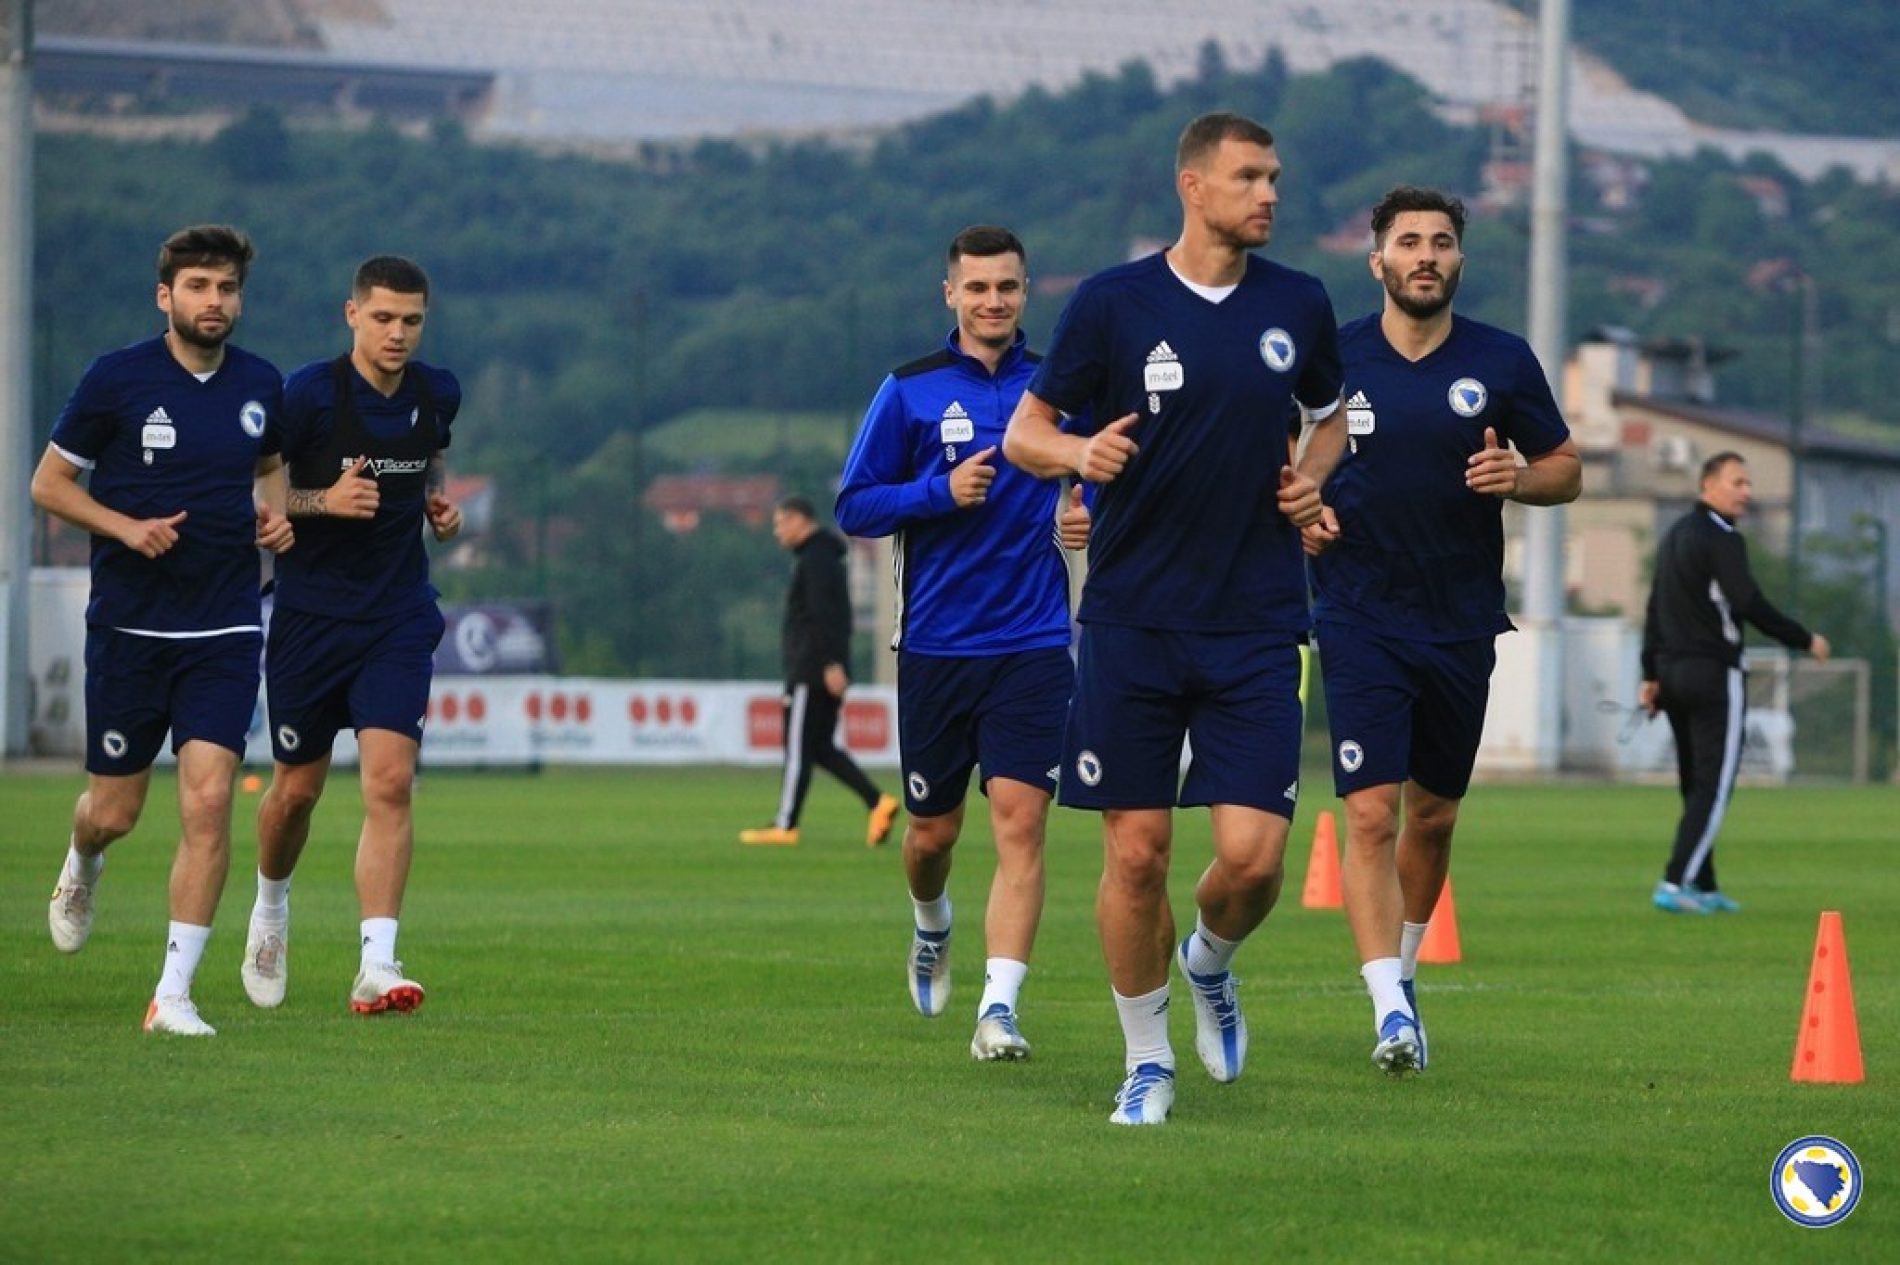 Liga nacija: Bosna i Hercegovina – Rumunija večeras na Bilinom polju u Zenici